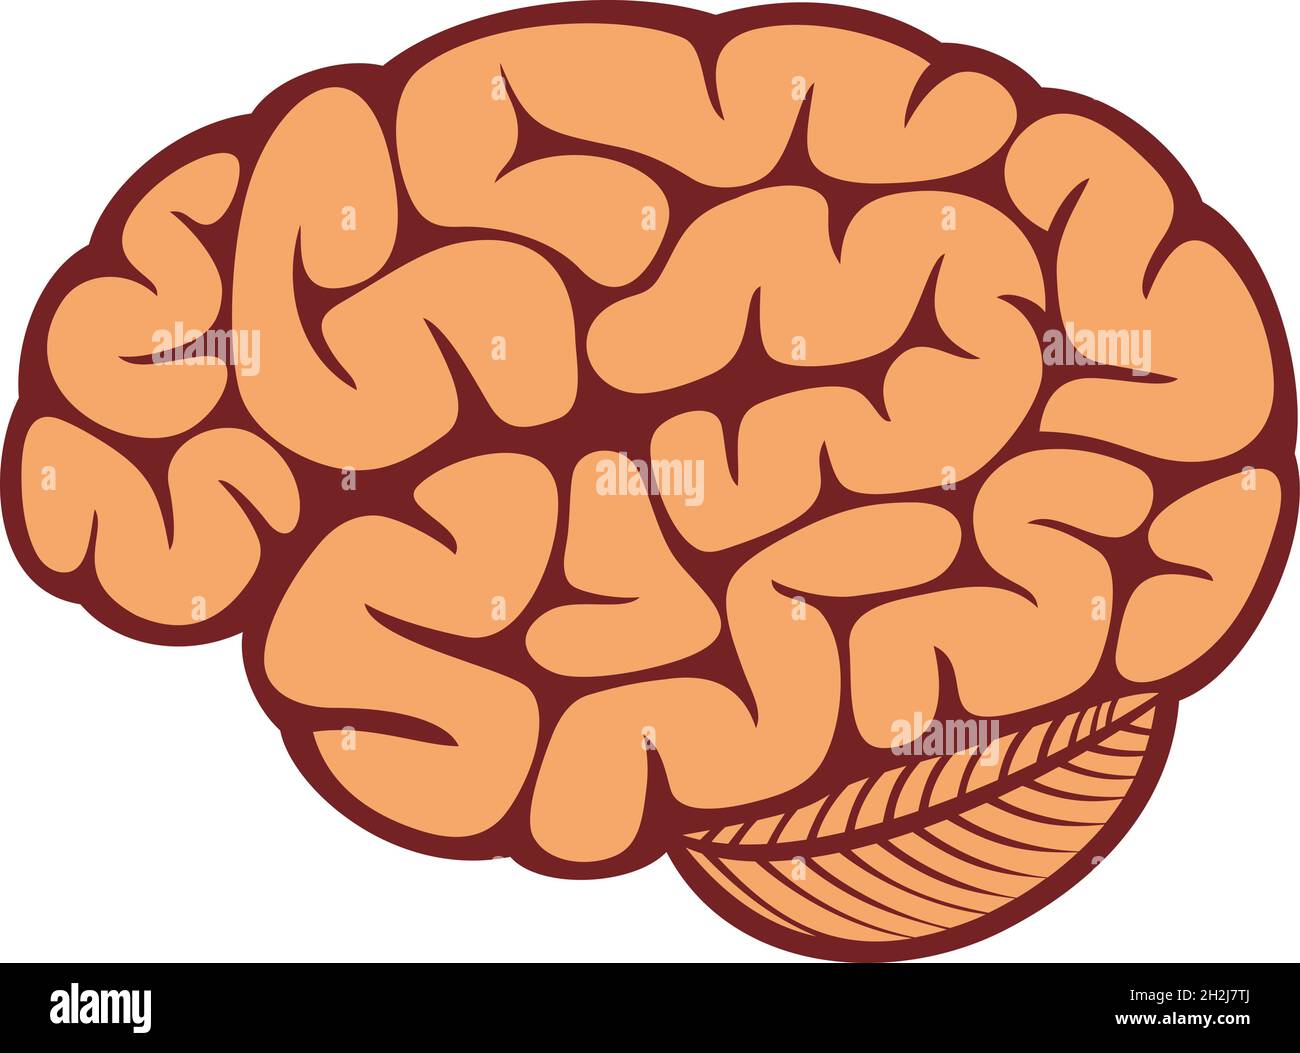 The human brain vector illustration Stock Vector